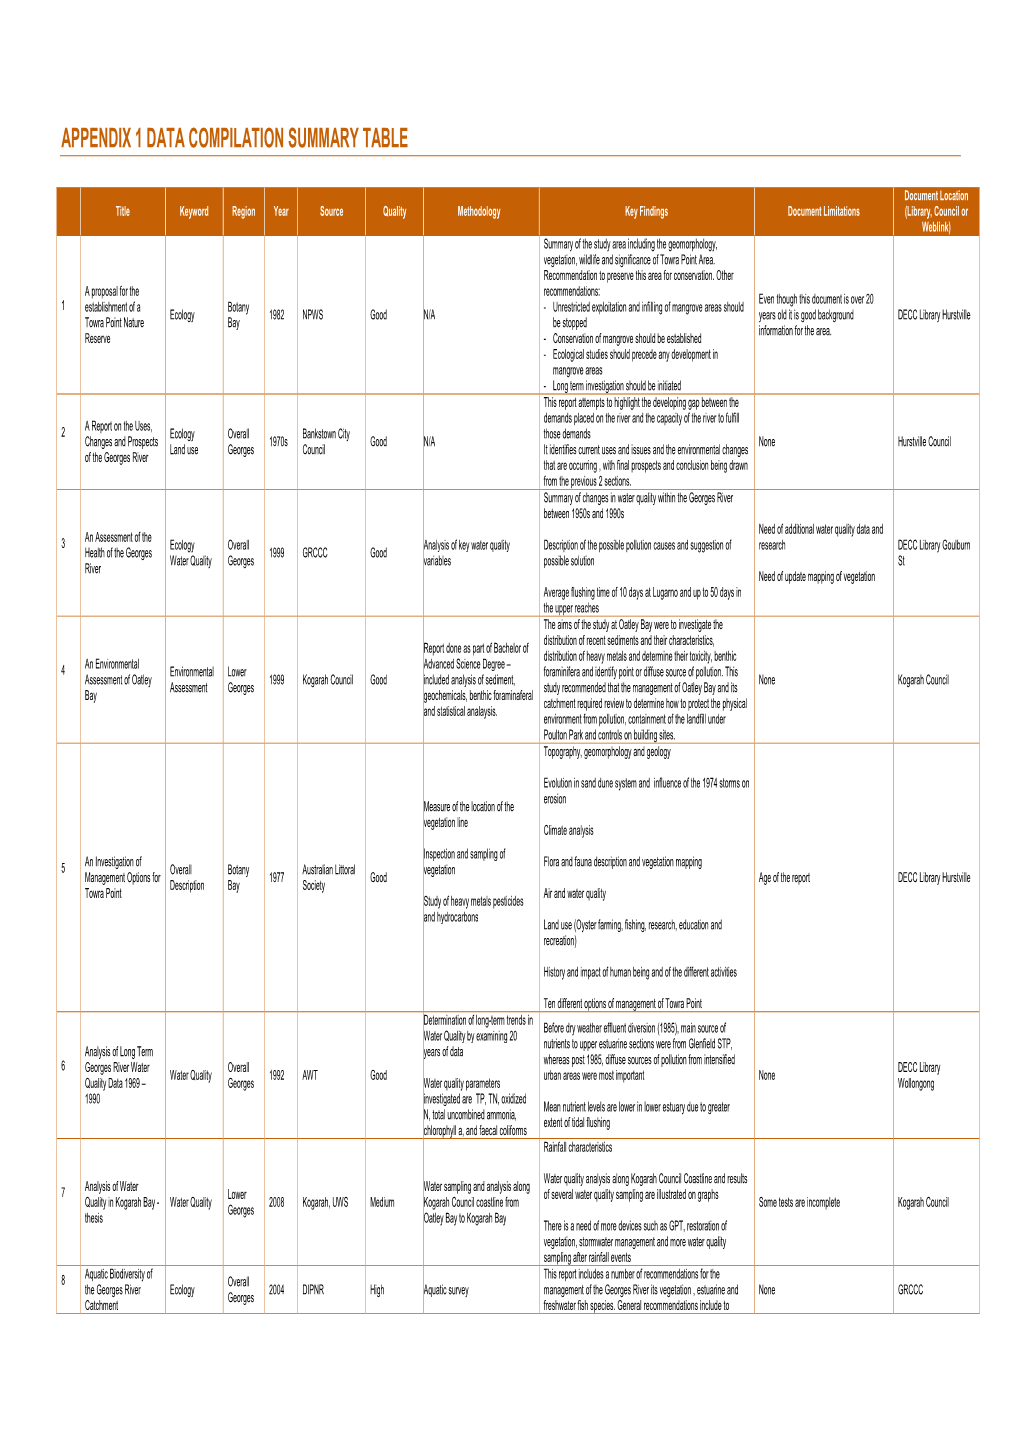 Ŀ Appendix 1 Data Compilation Summary Table